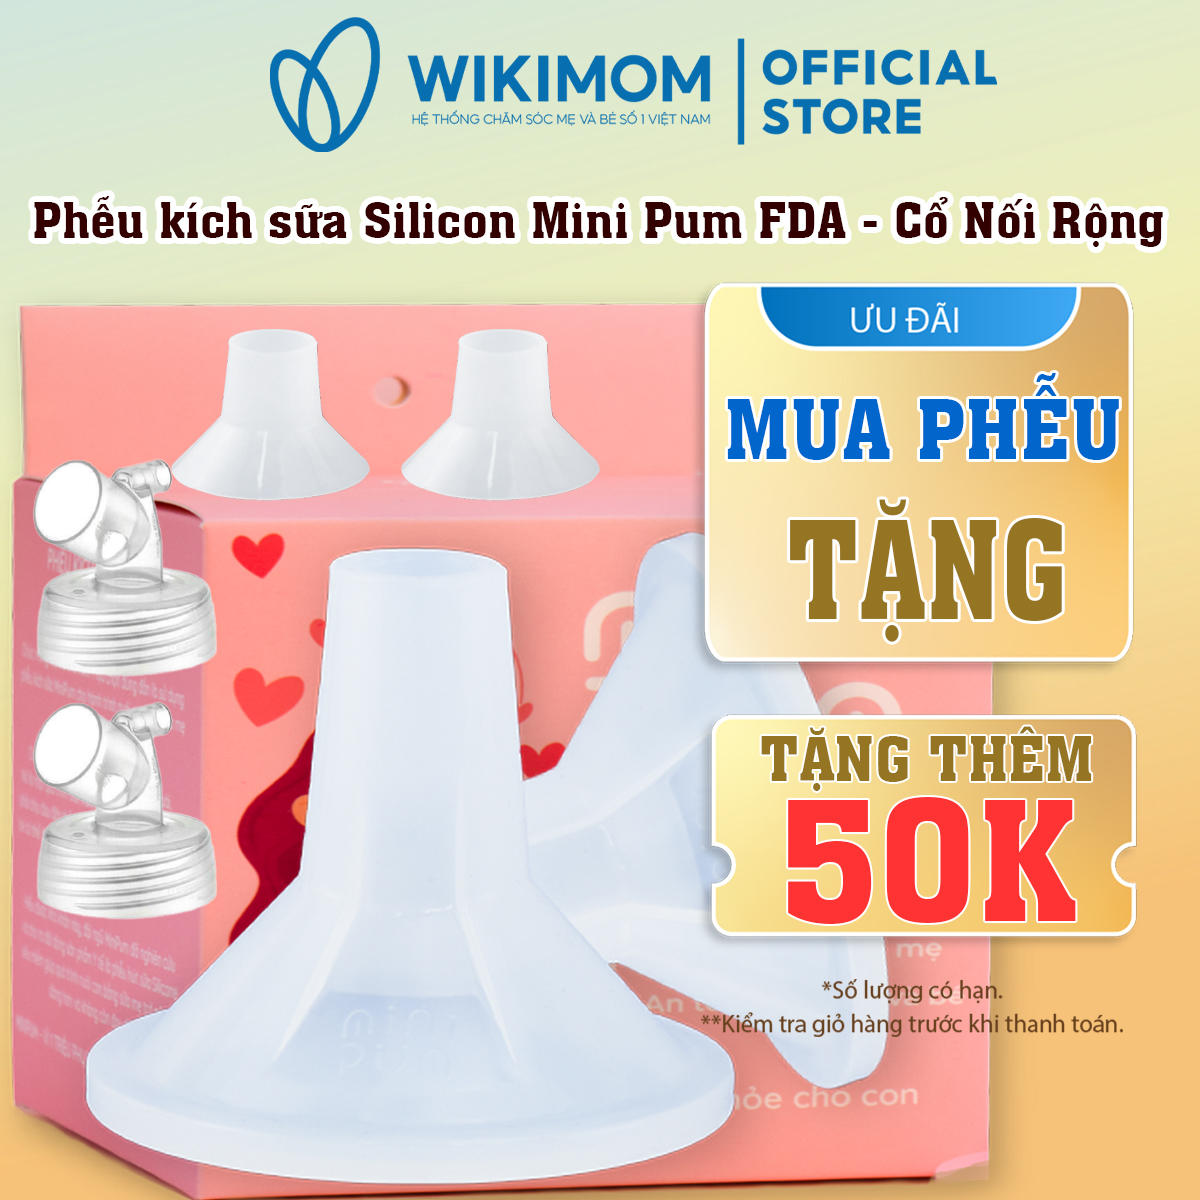 Phễu hút sữa Silicon Mini Pum FDA - Gồm 2 cổ nối rộng, 4 đệm trợ size